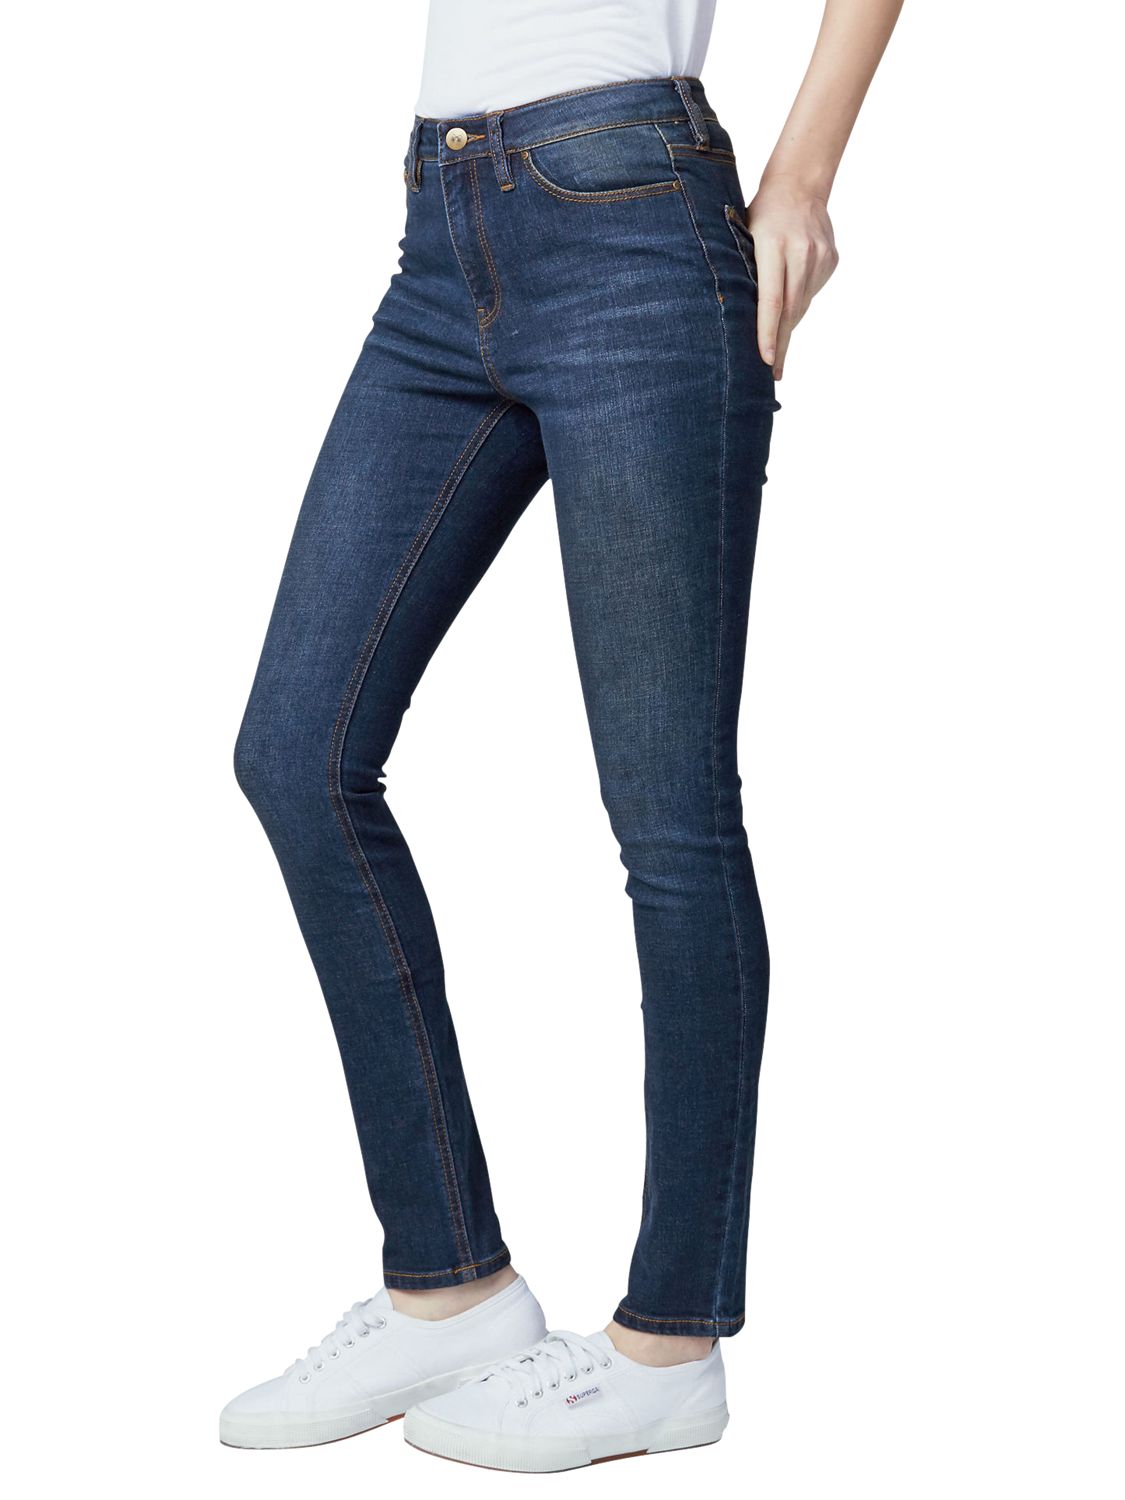 Warehouse Powerhold Skinny Jeans, Dark Wash Denim at John Lewis & Partners